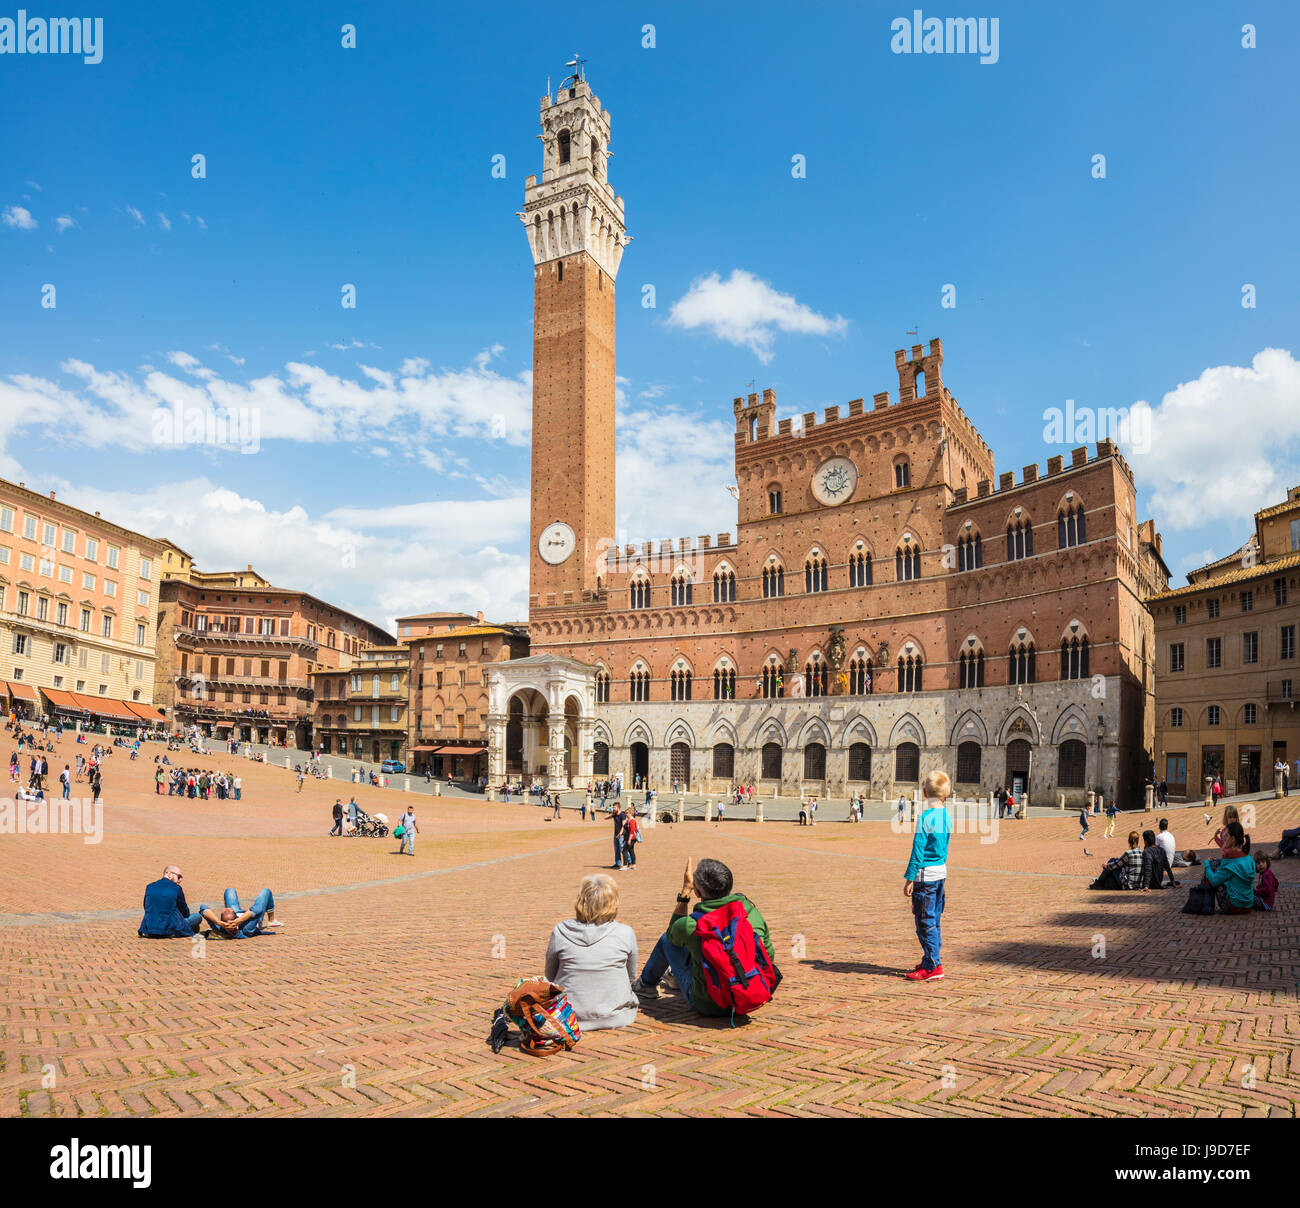 Touristen zu bewundern, dem historischen Palazzo Pubblico und den Torre del Mangia, Piazza del Campo, Siena, UNESCO, Toskana, Italien Stockfoto